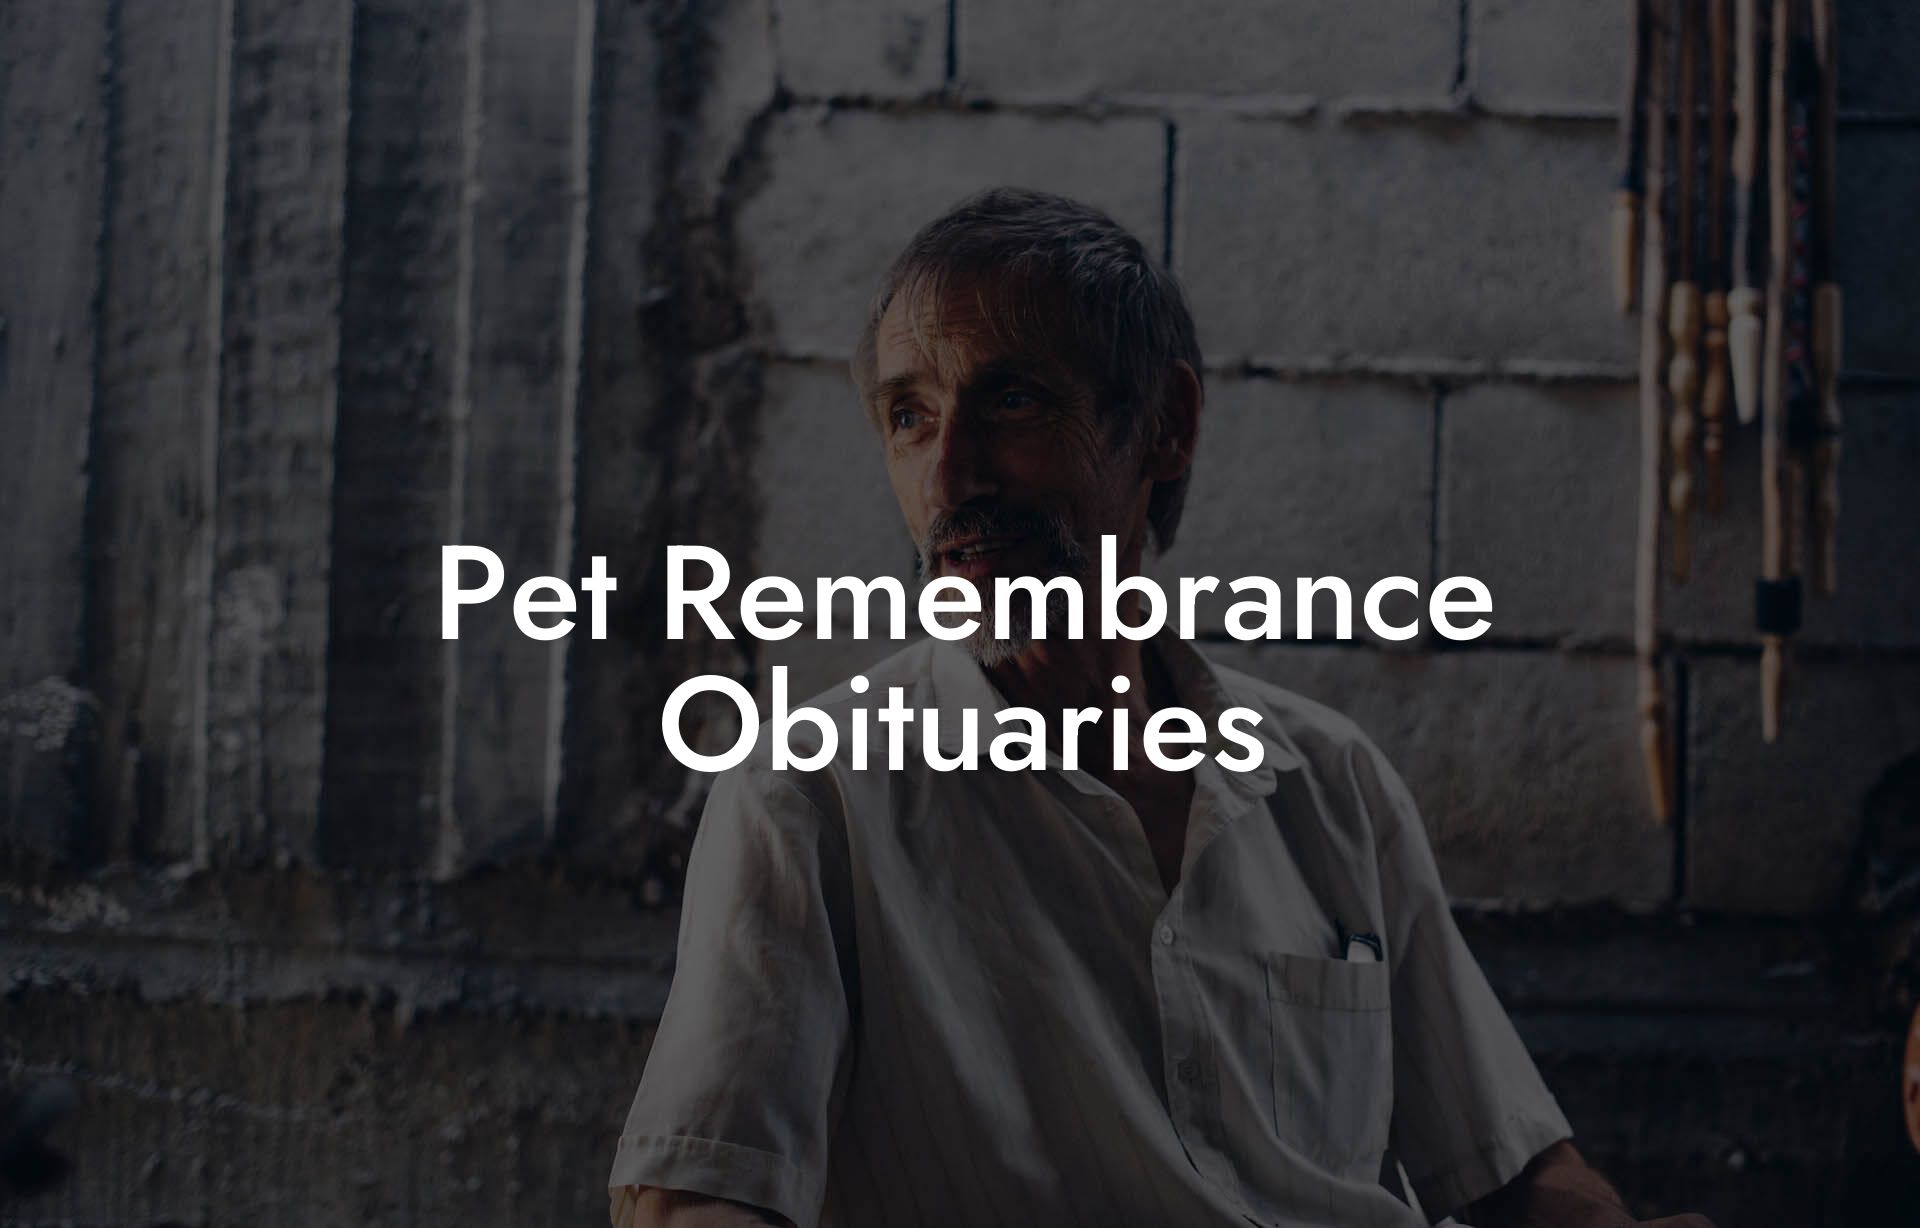 Pet Remembrance Obituaries